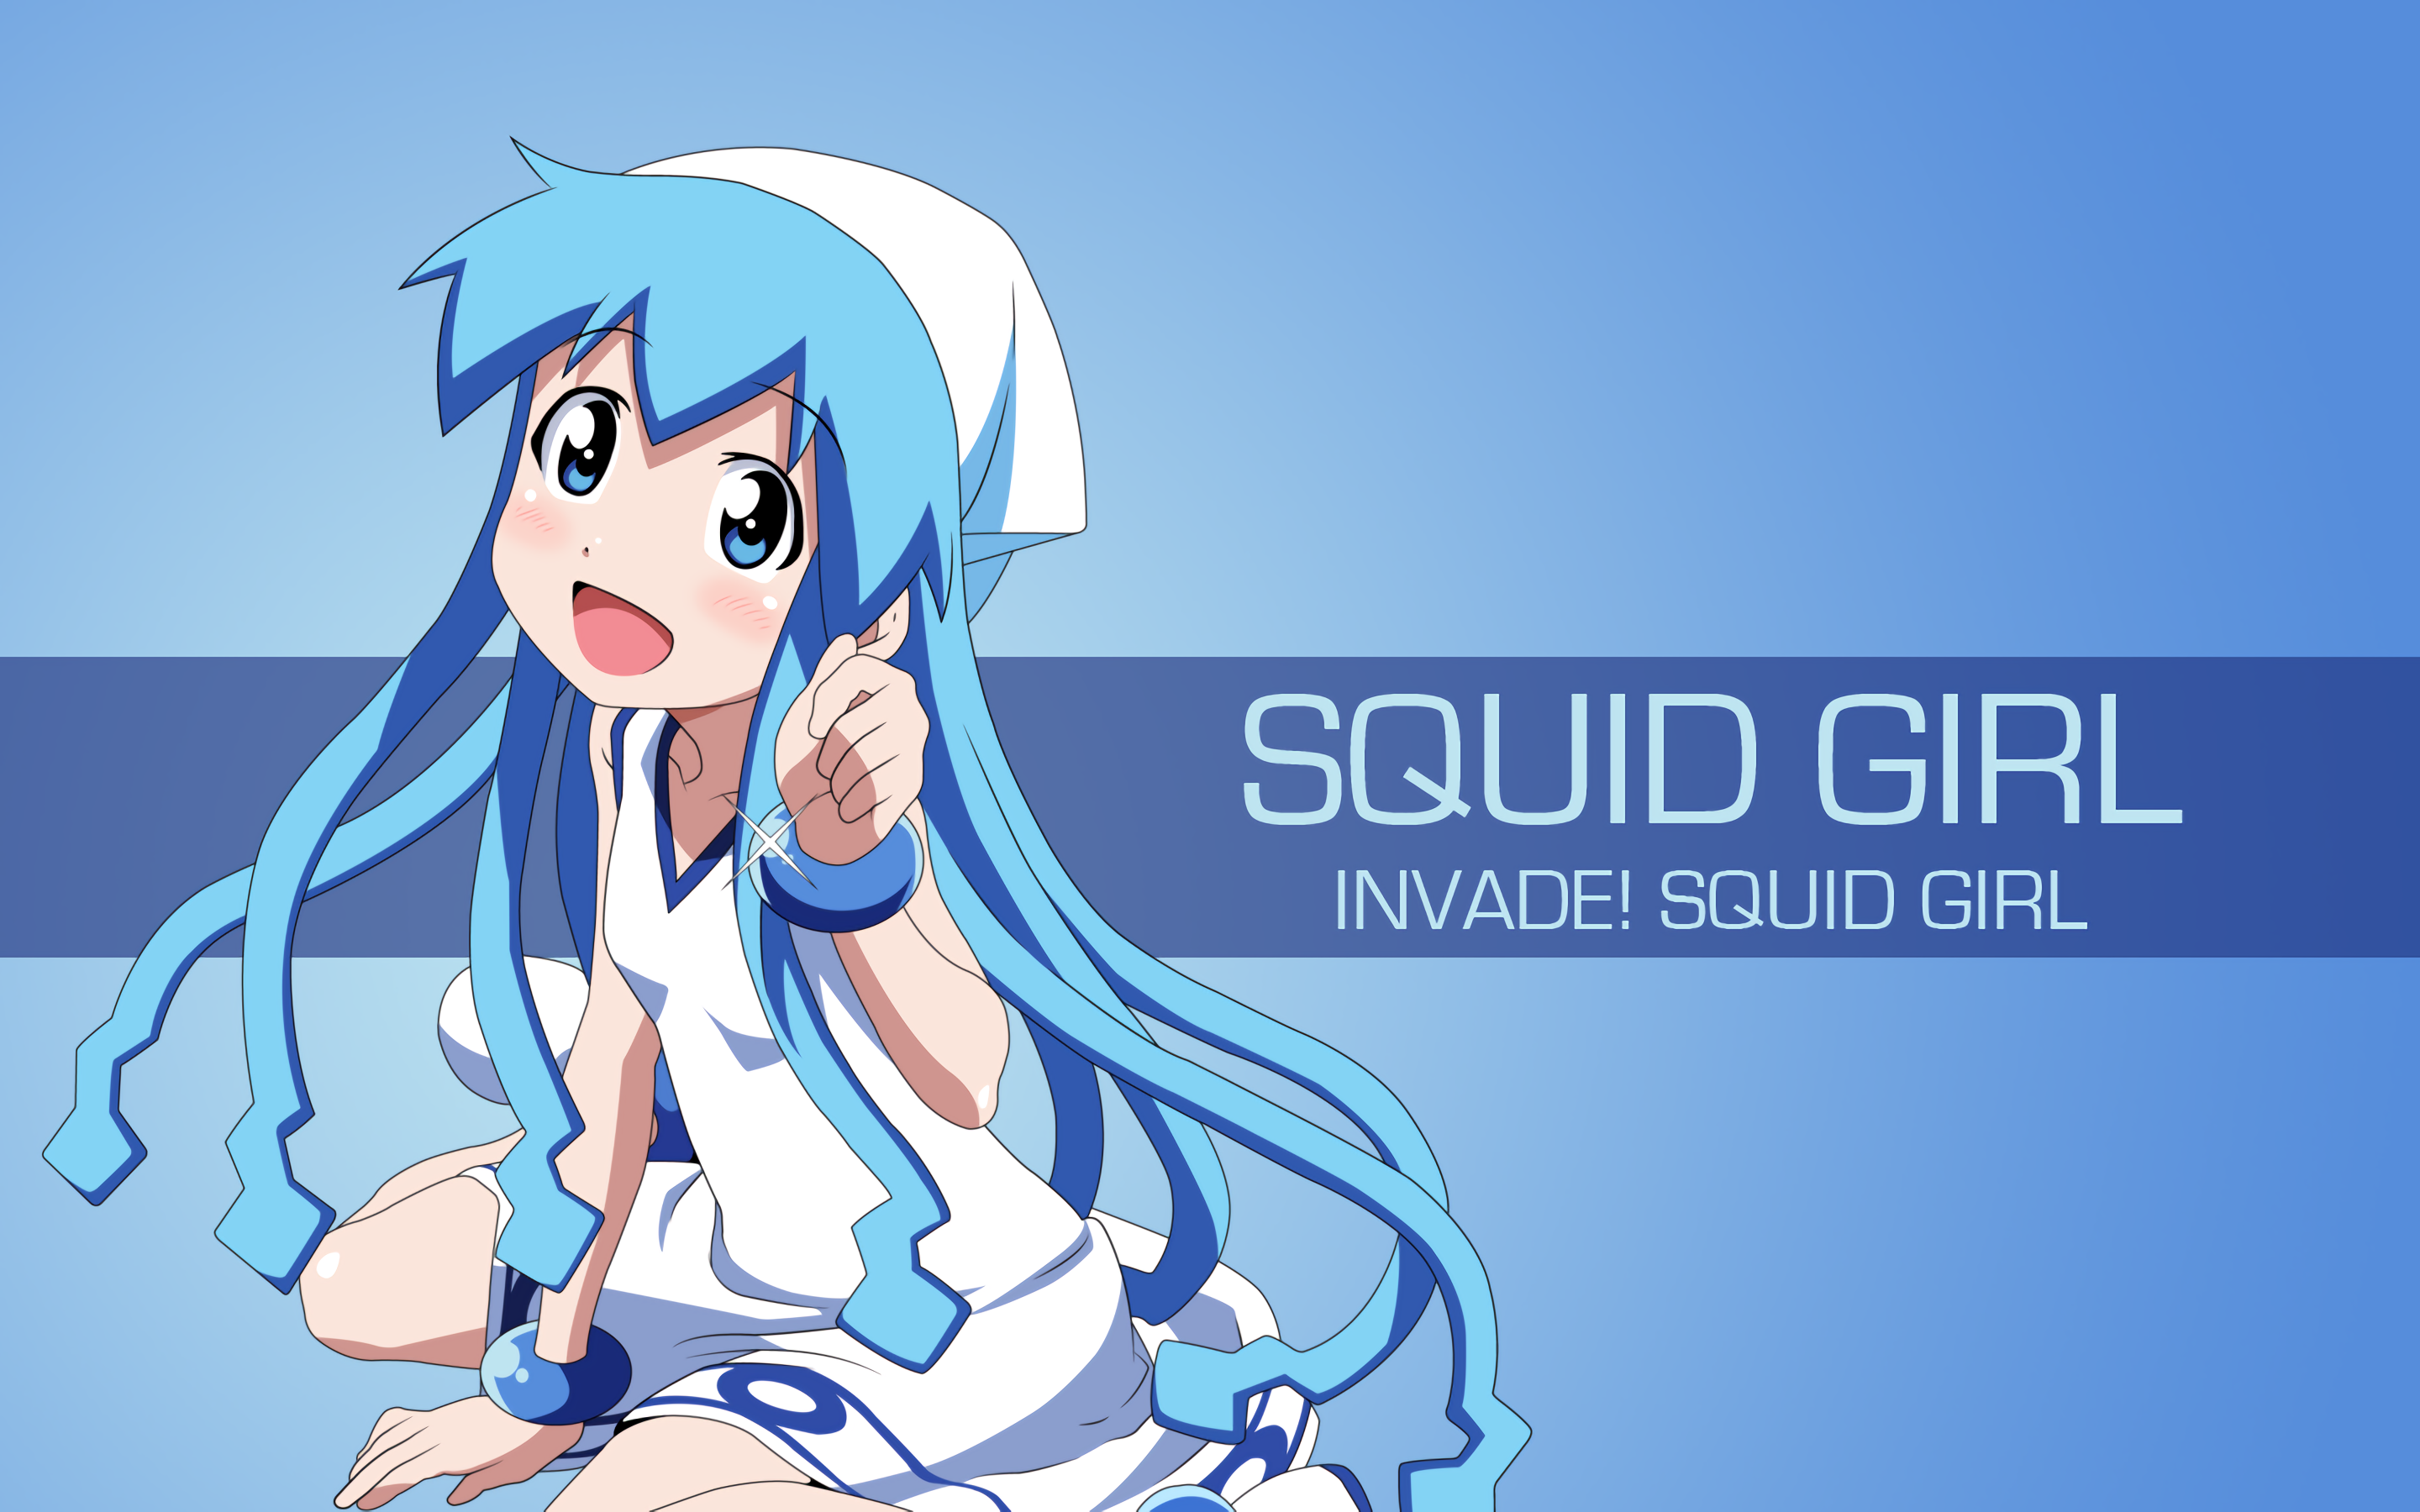 Amazon.com: Squid Girl (Shinryaku Ika Musume) Anime Fabric Wall Scroll  Poster (16x23) Inches.[WP]- Shinryaku- 41: Posters & Prints